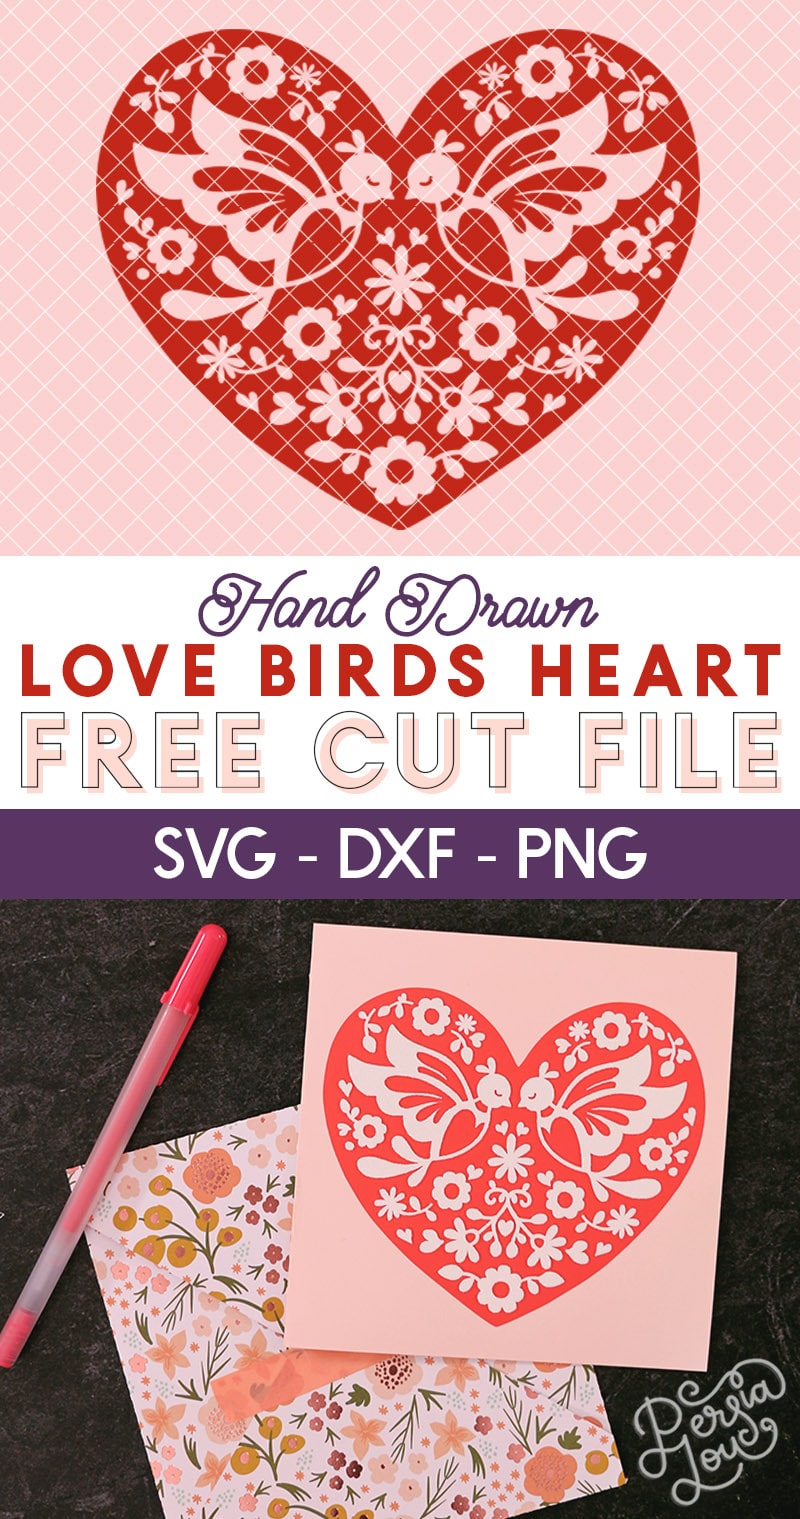 Download Free Love Birds Heart Svg Cut File Persia Lou